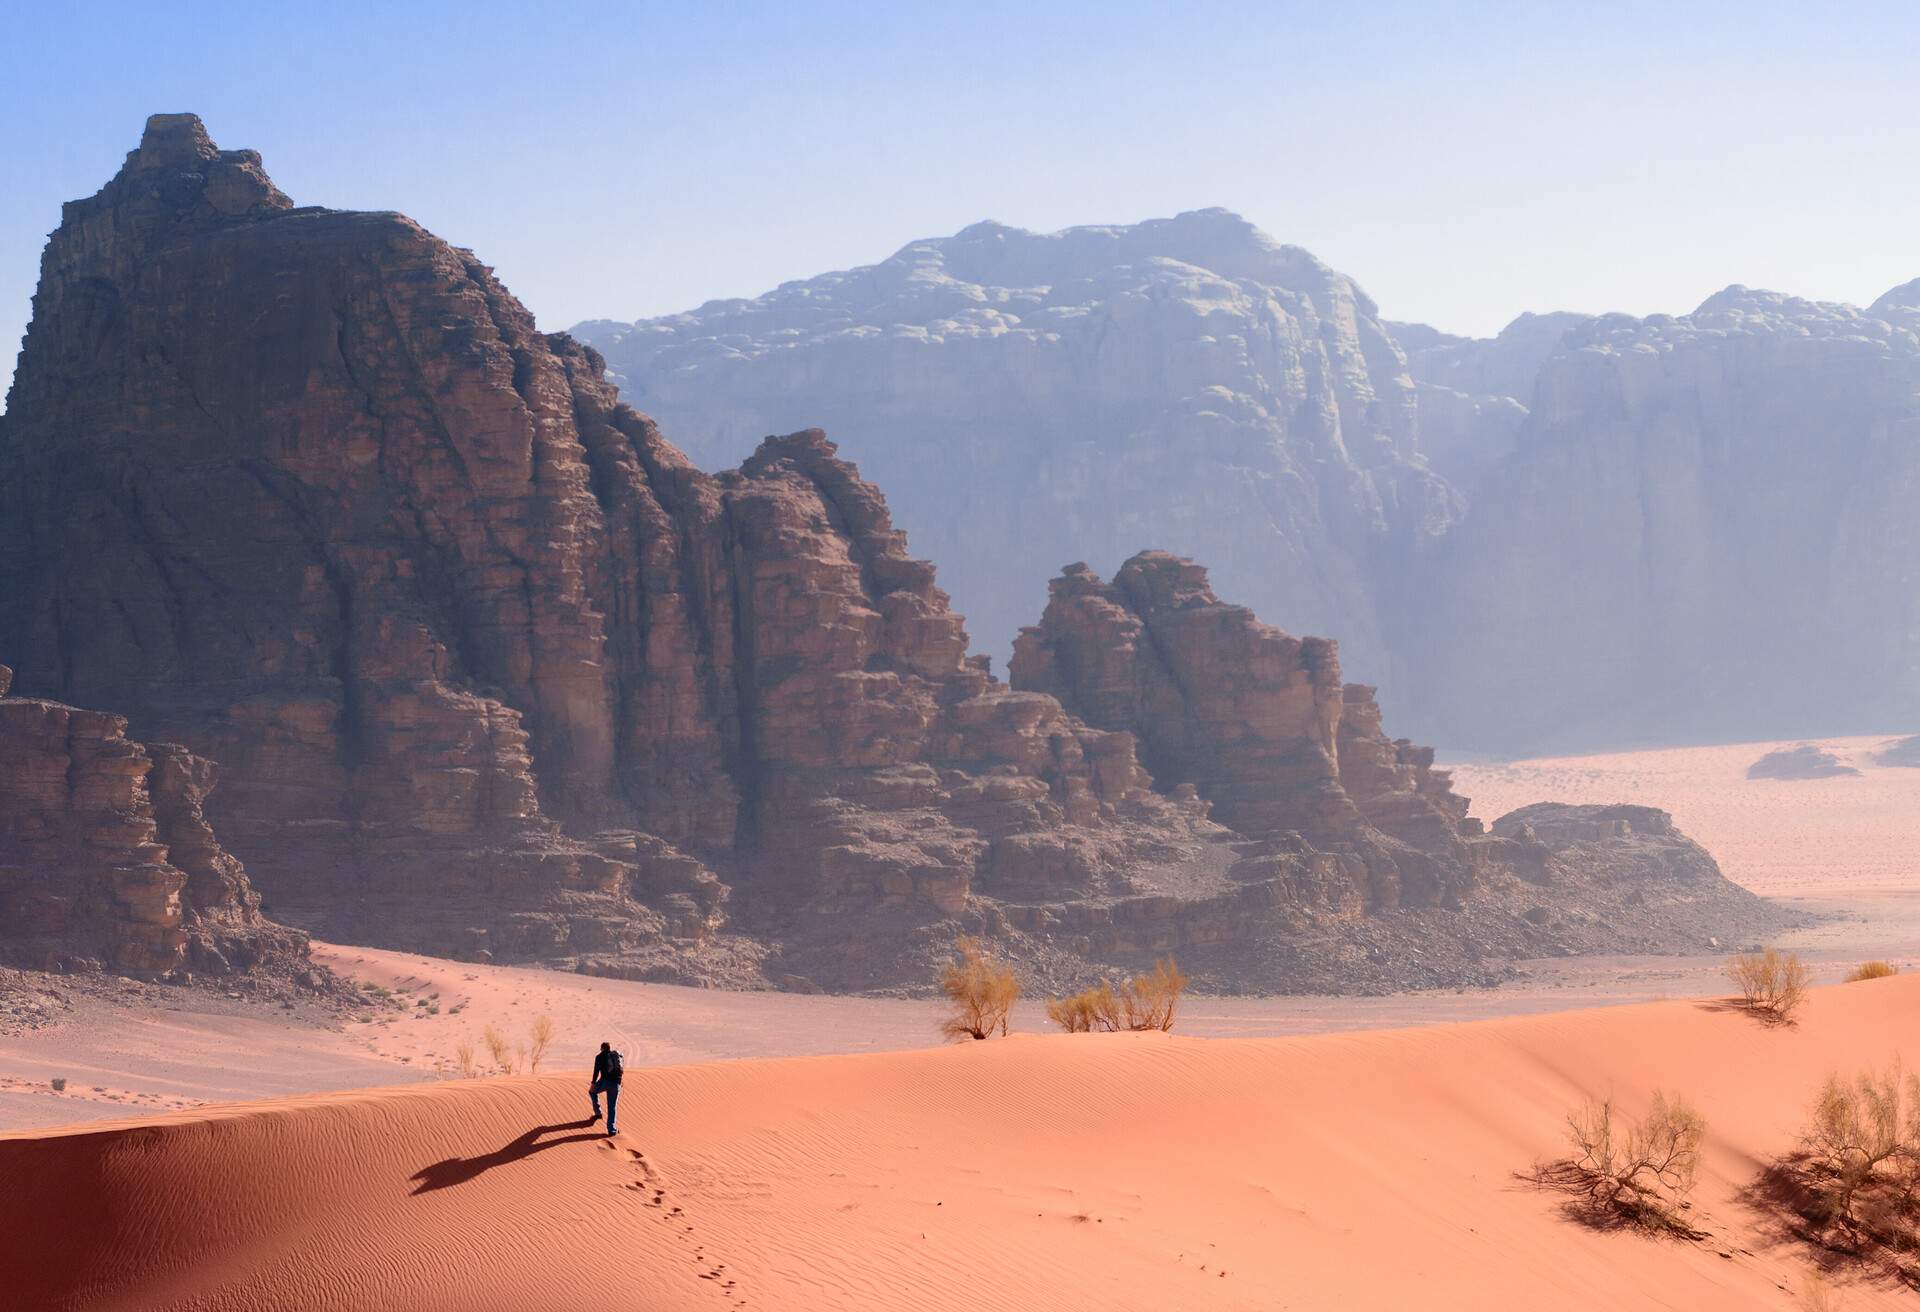 A Hiker on a Ridge in the Desert in Wadi Rum, Jordan